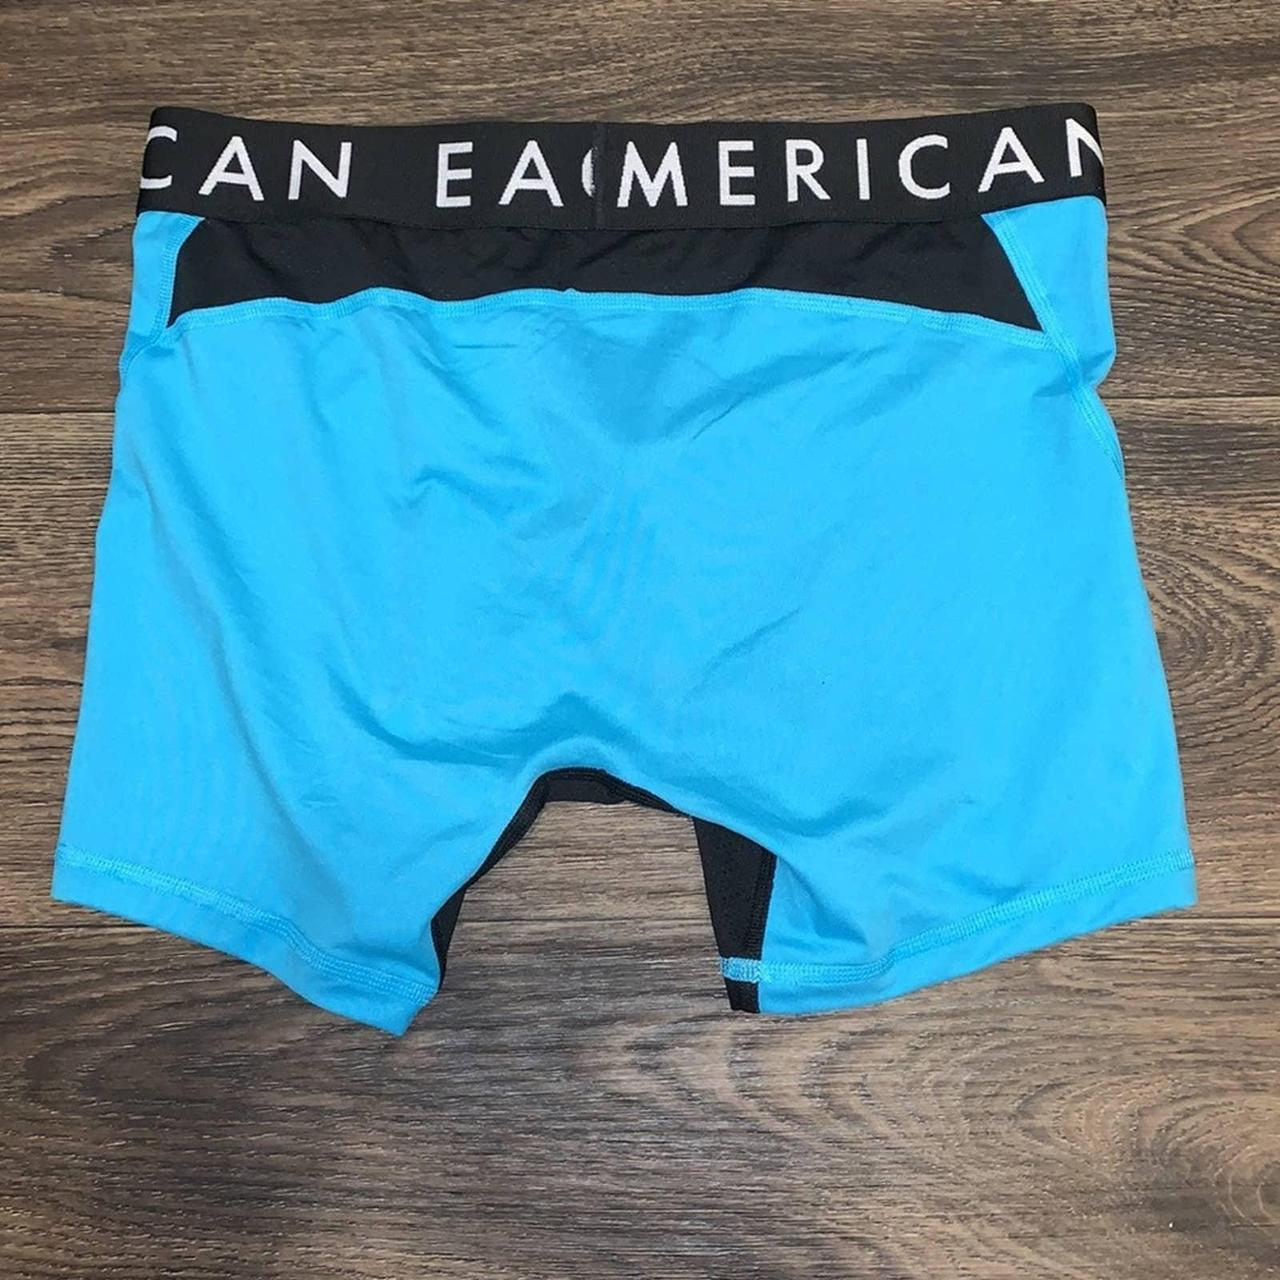 XL american eagle bird boxers #AE #boxers #underwear - Depop